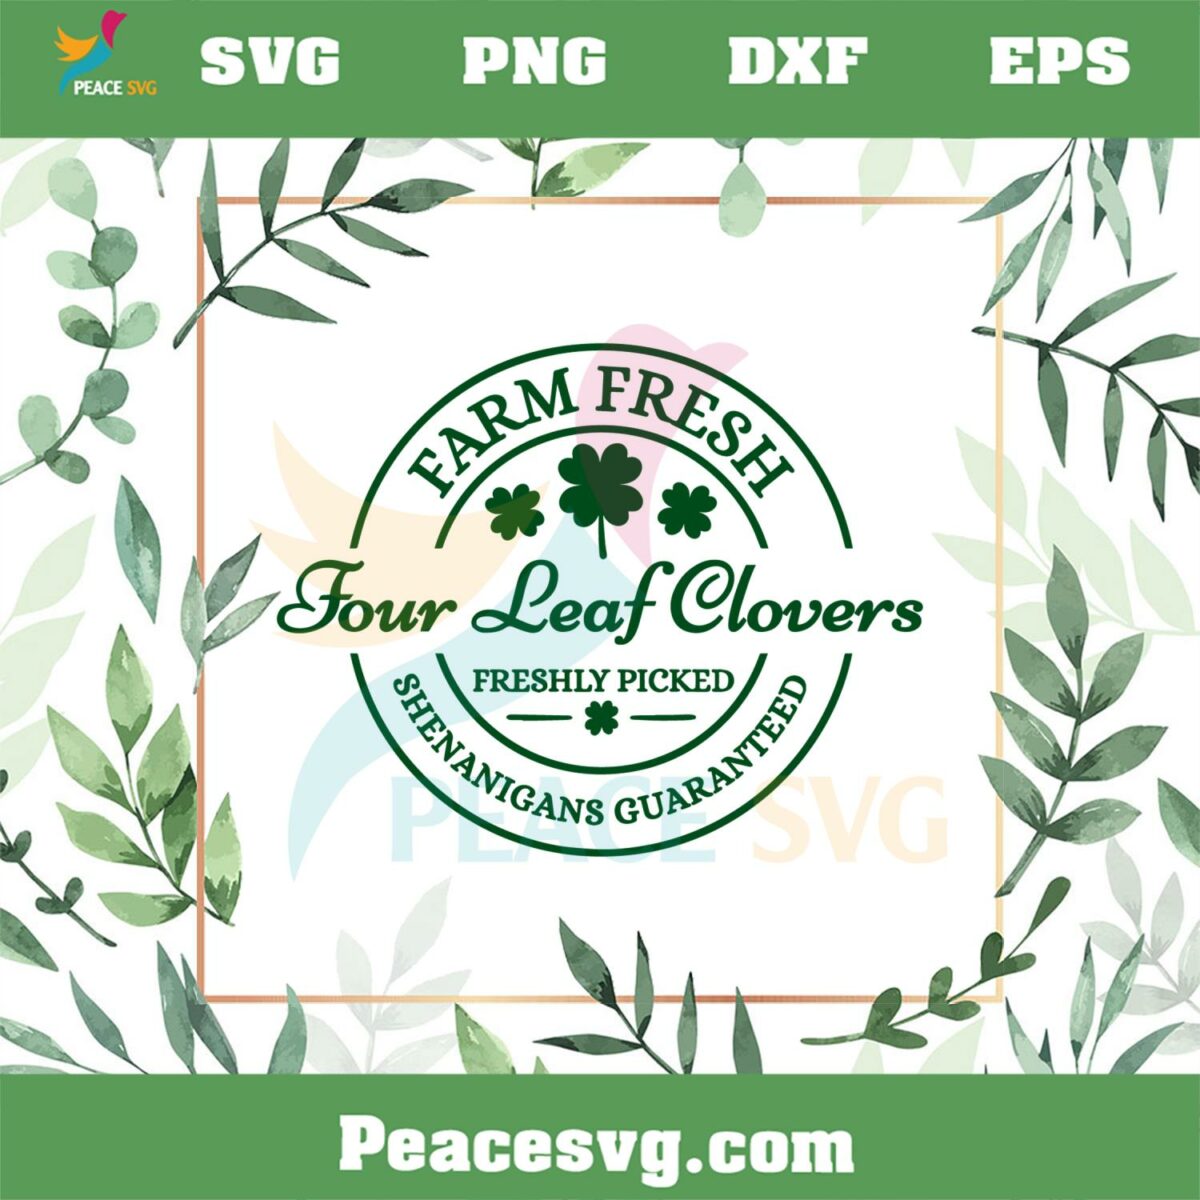 Farm Fresh Four Leaf Clovers Freshly Picked SVG Shenanigans Guaranteed SVG